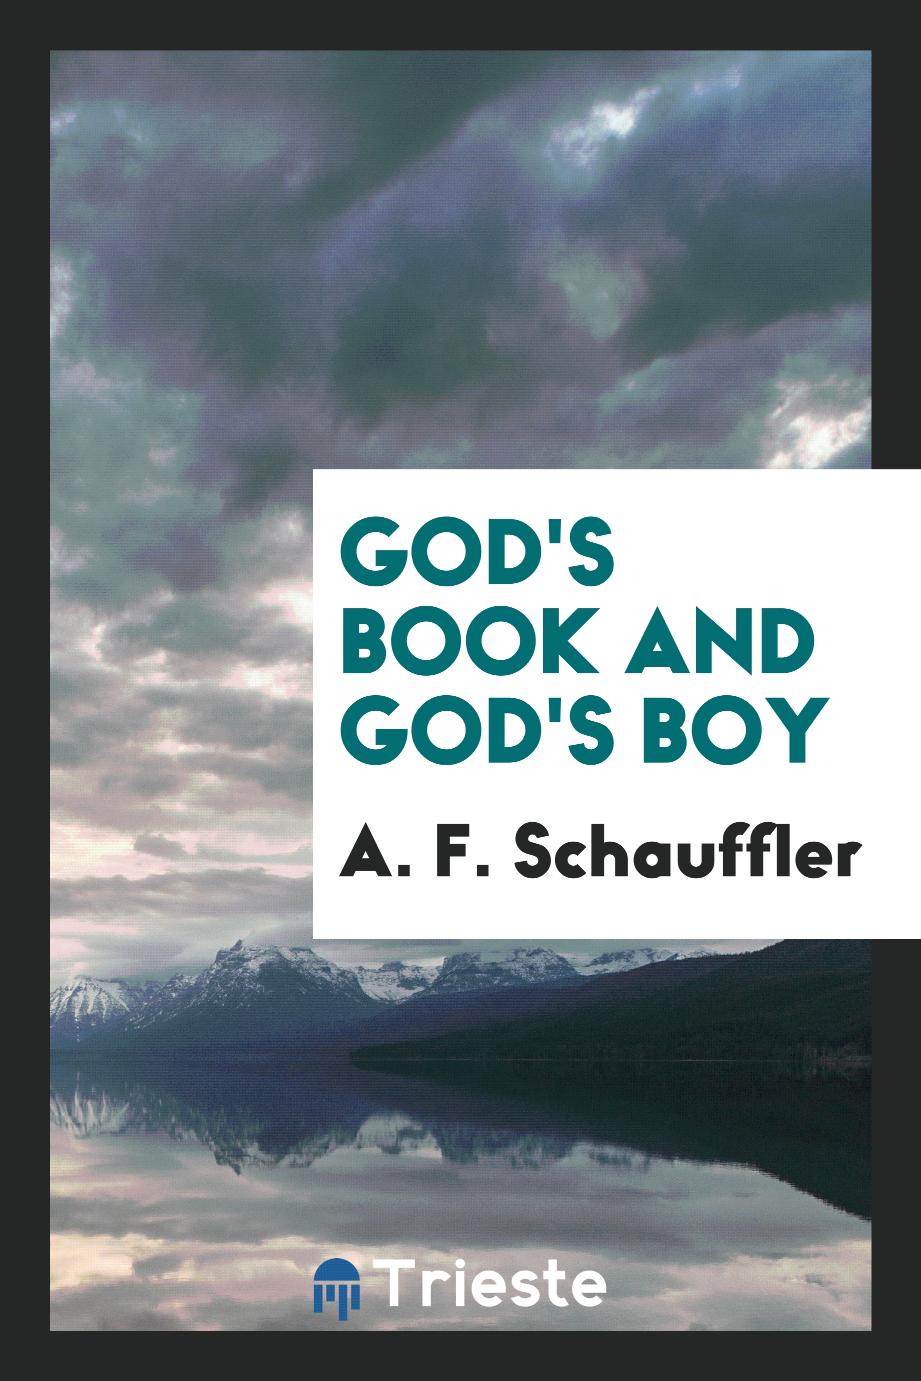 God's book and God's boy